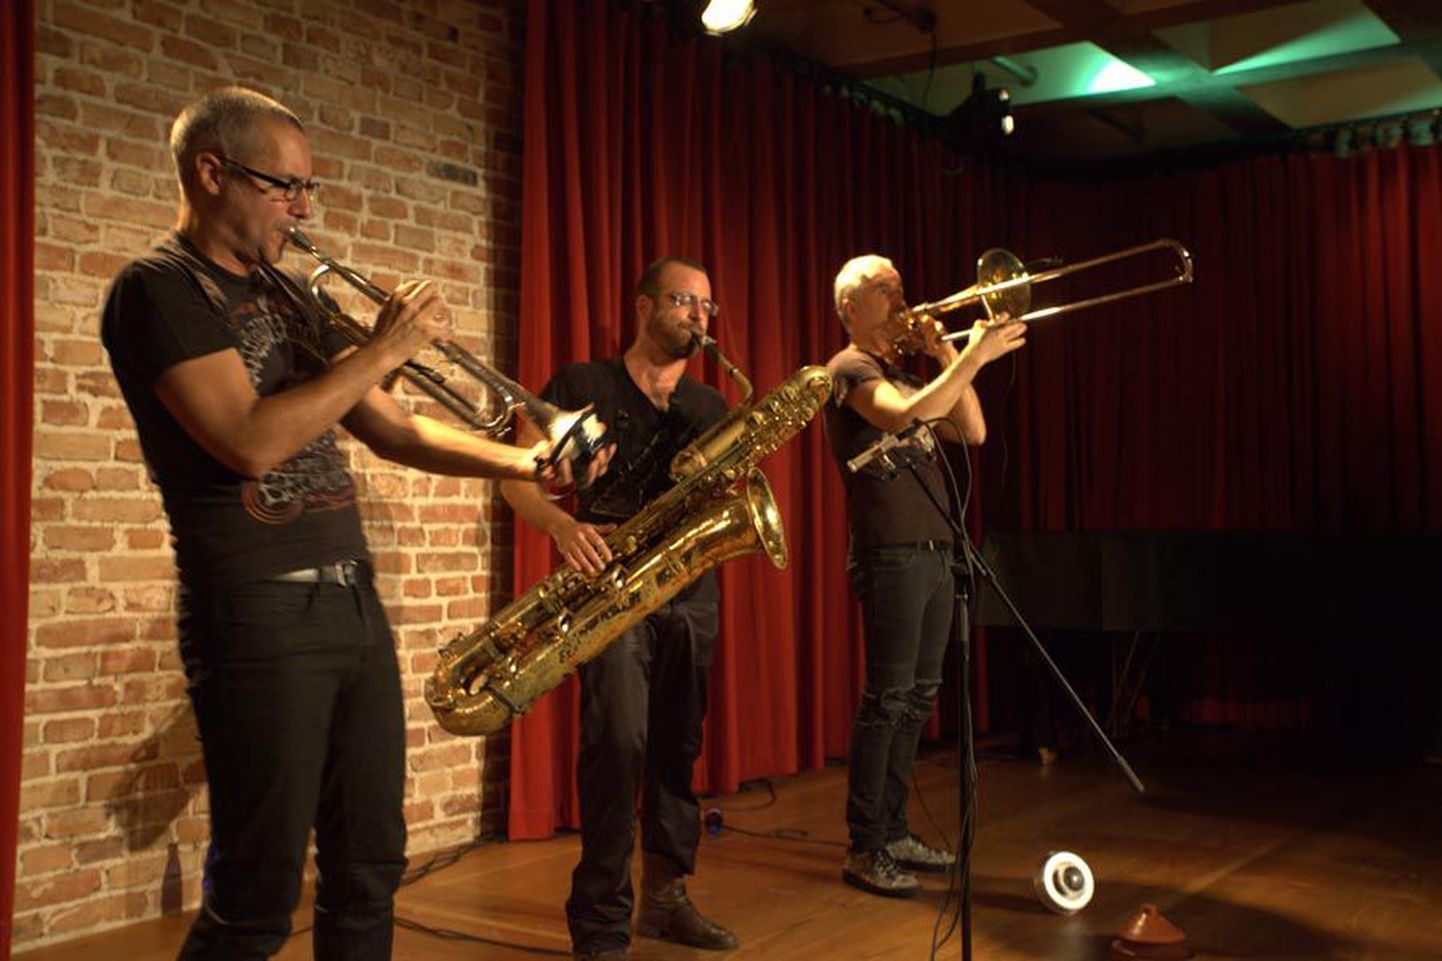 Trio Journal Intime’i pilliparki kuuluvad bass-saksofon, tromboon ja trompet. Kollektiivi muusika on inspireeritud Jimi Hendrixi loomingust.